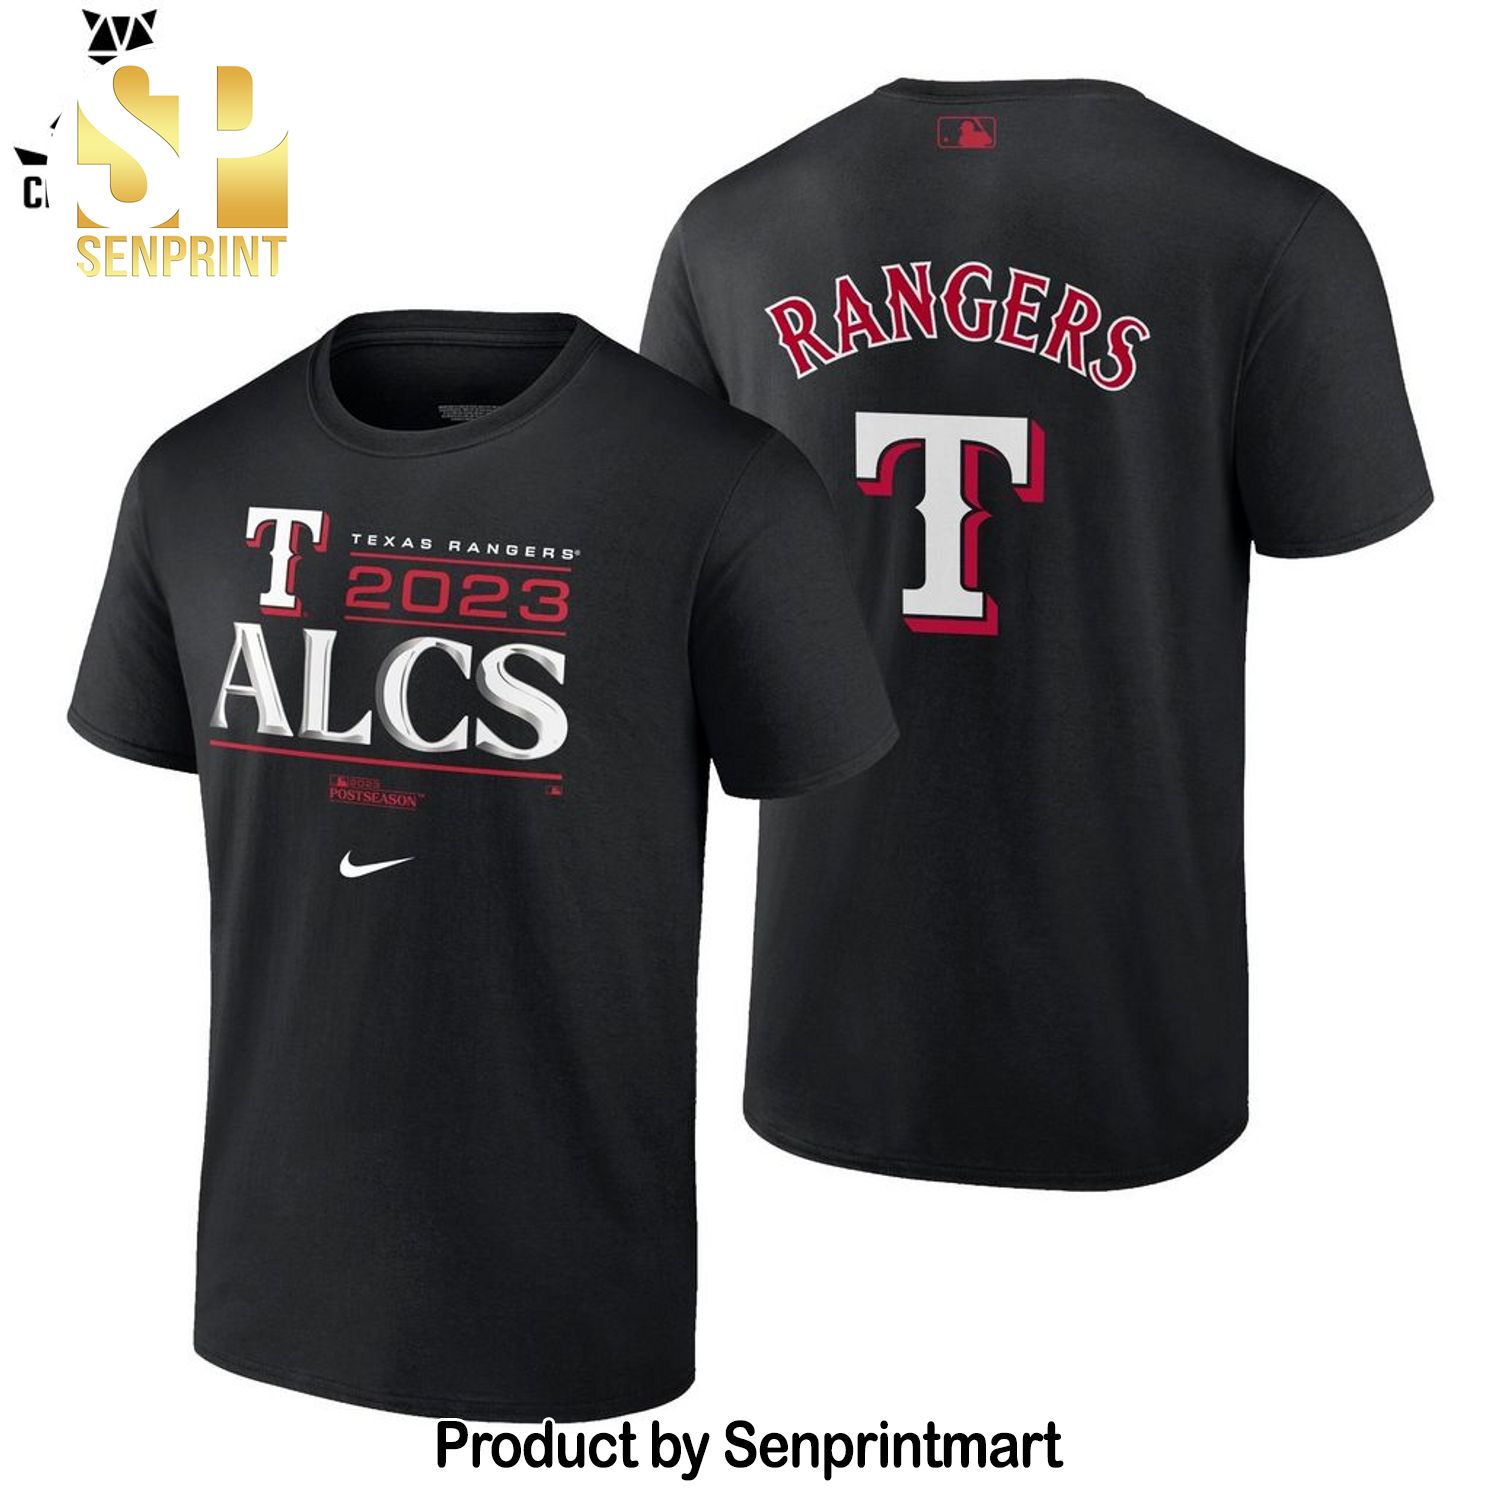 Taxas Gangers 2023 ALCS Black 3D Full Print Shirt